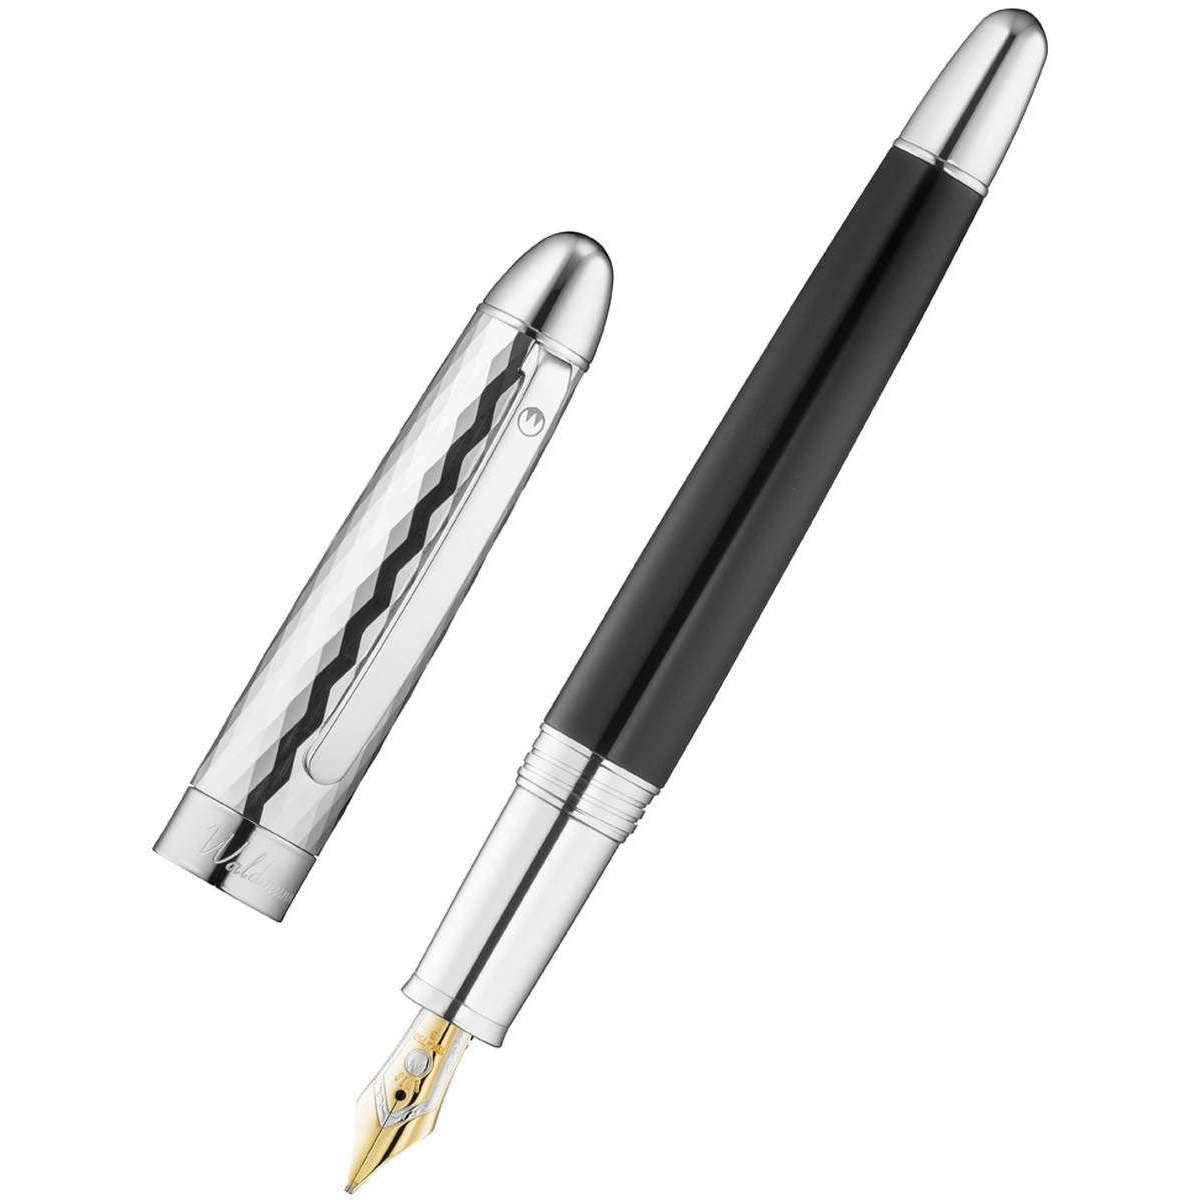 waldmann pens precieux wave 18ct gold nib fountain pen - black/silver